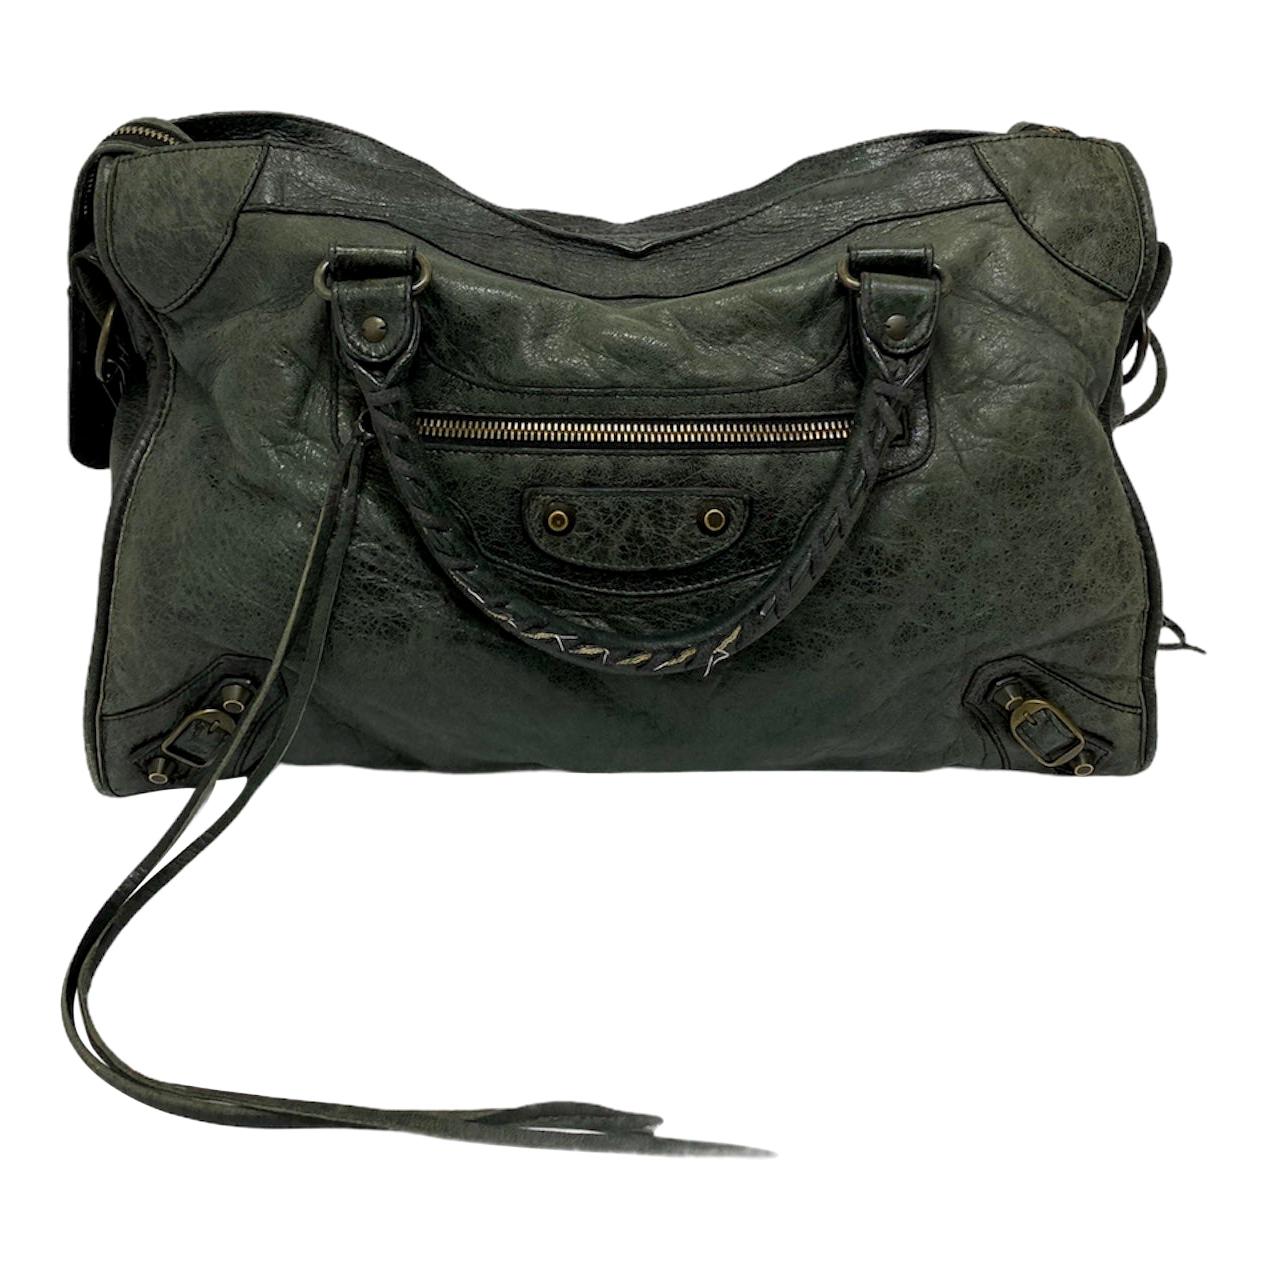 Balenciaga Green Leather City Bag with Brass Hardware